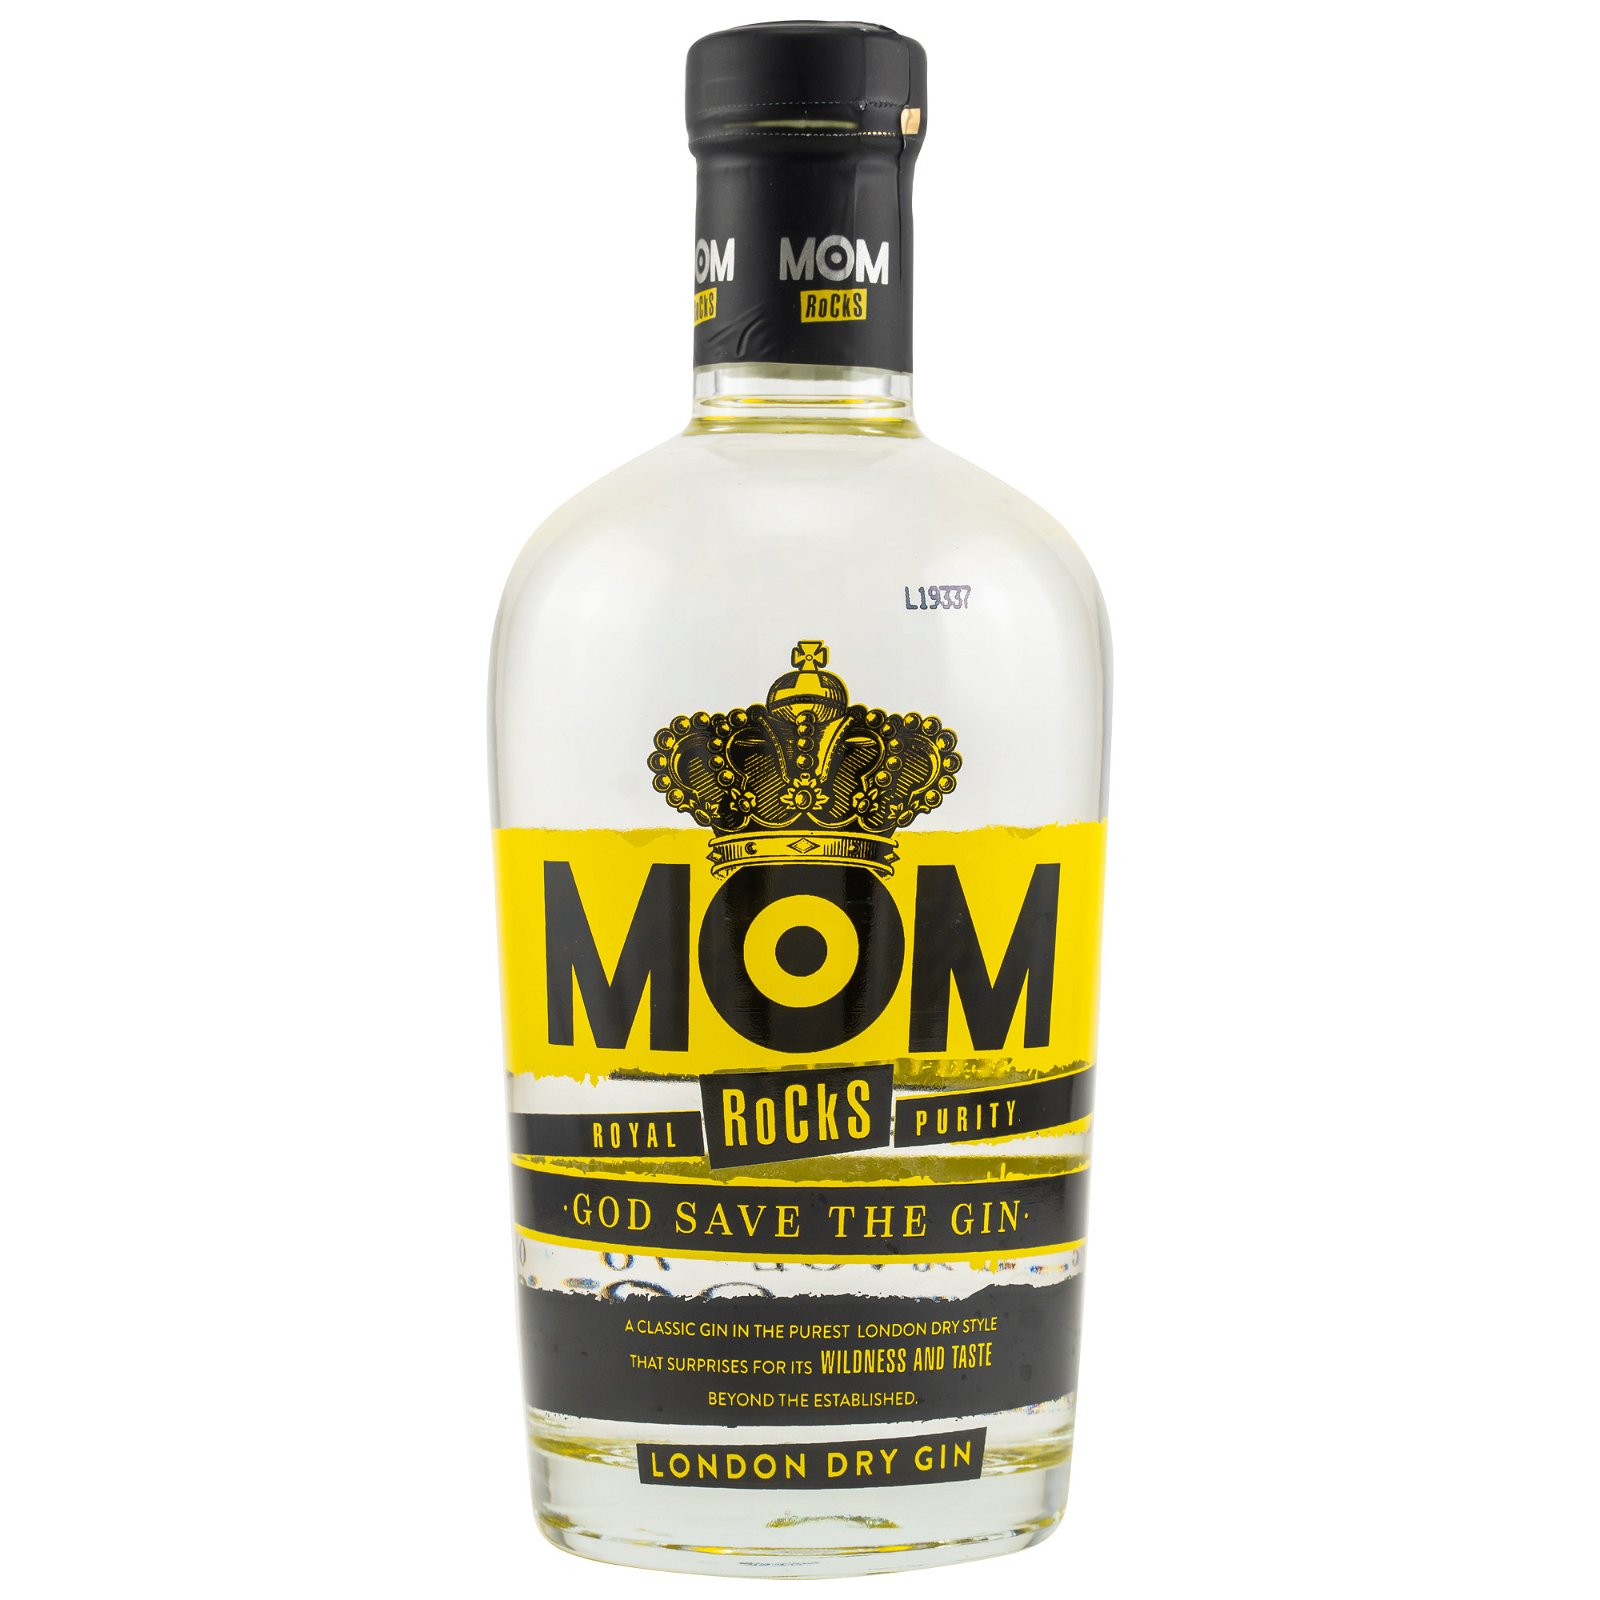 Mom Rocks Royal Purity Gin